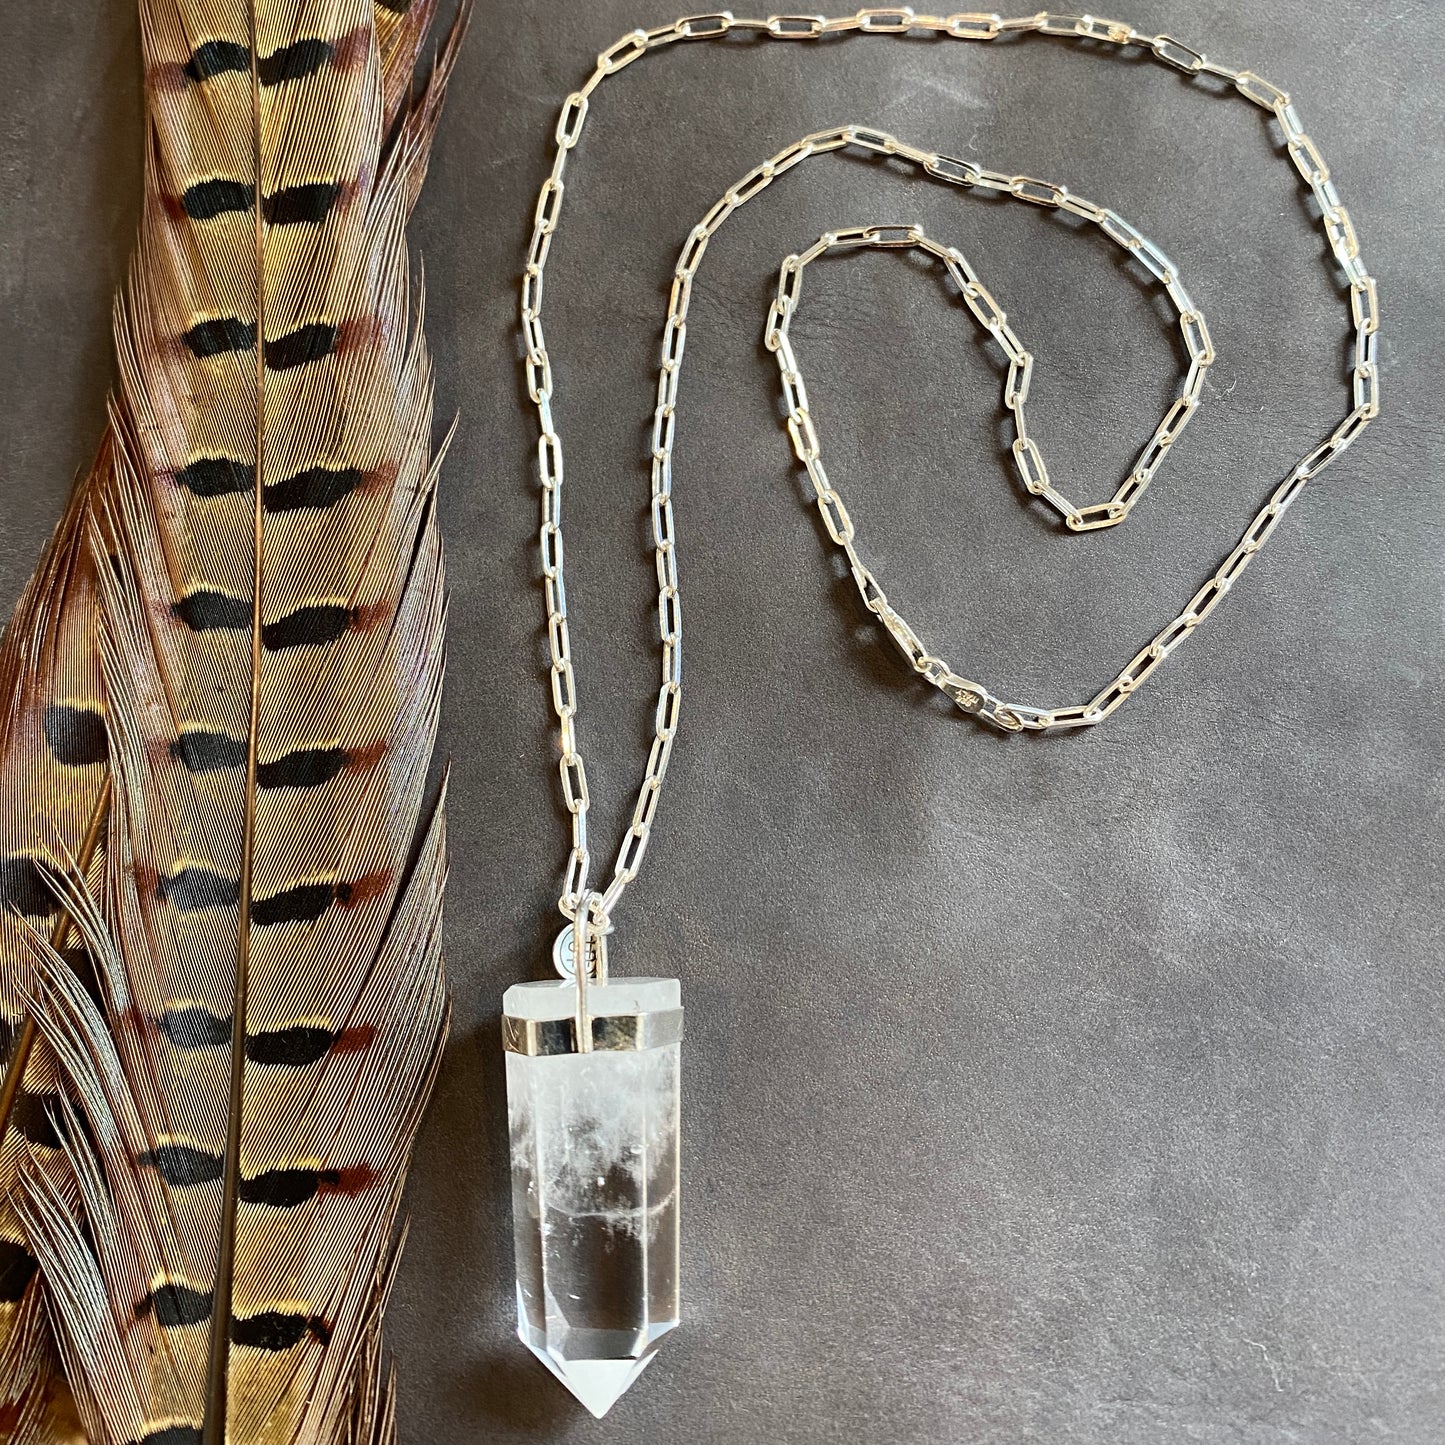 Clear quartz sterling silver chain pendant necklace. 24" necklace.